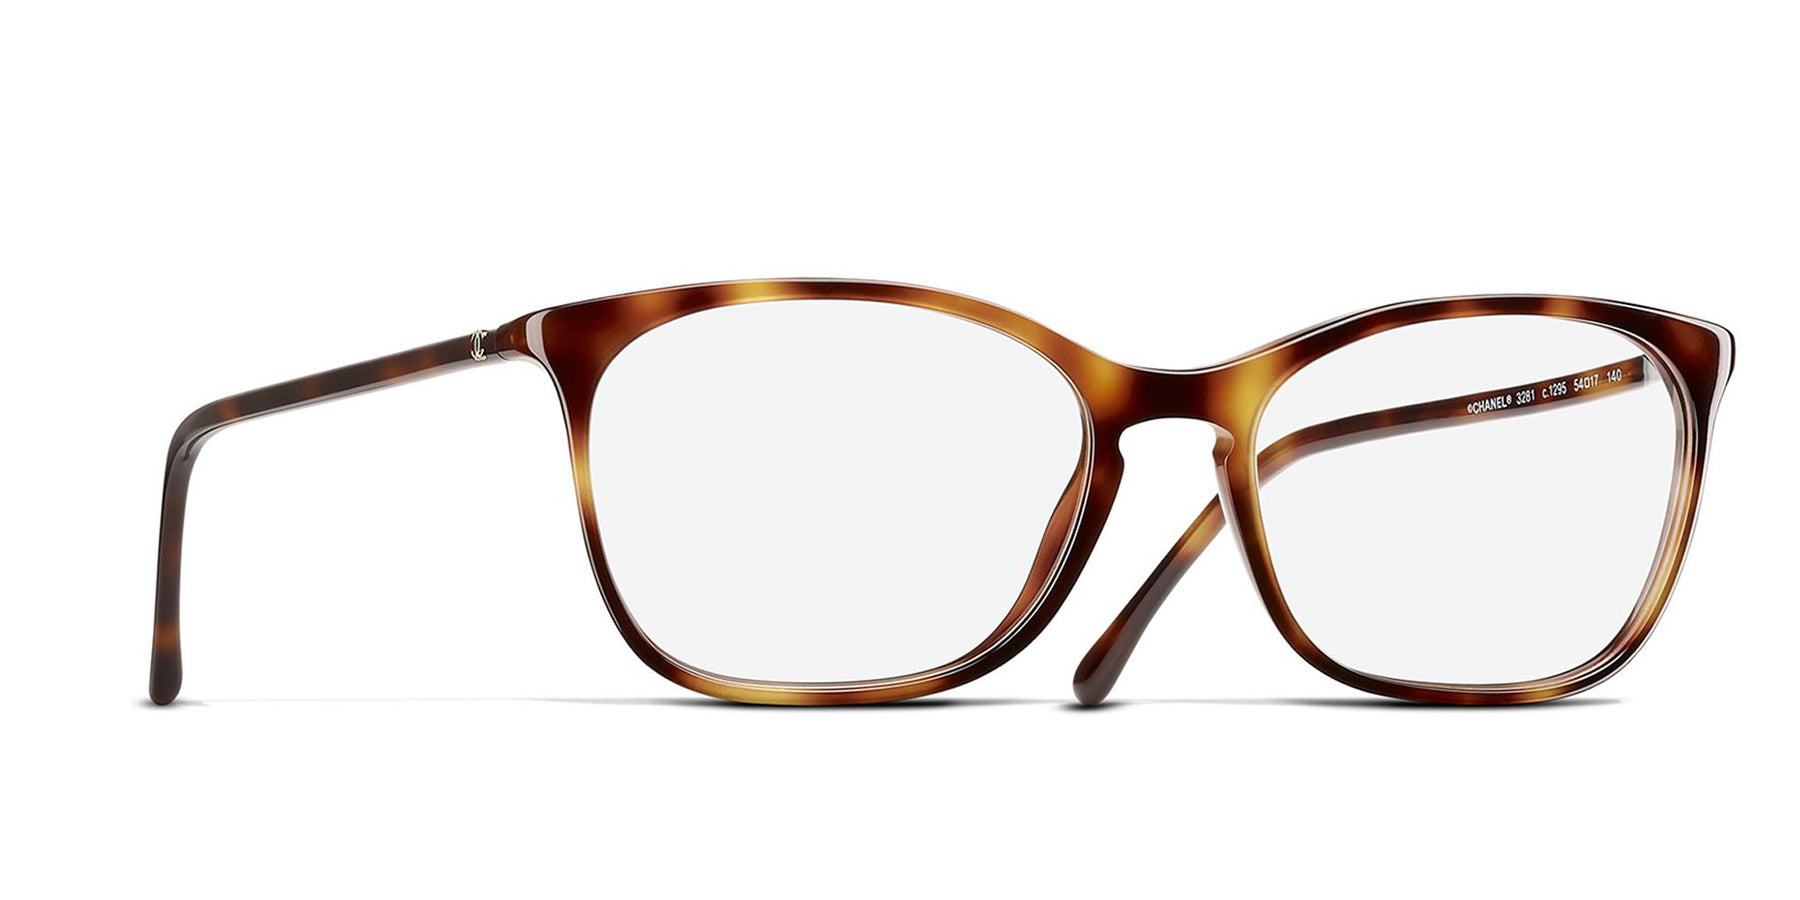 CHANEL Eyeglass frame 3281 c.501